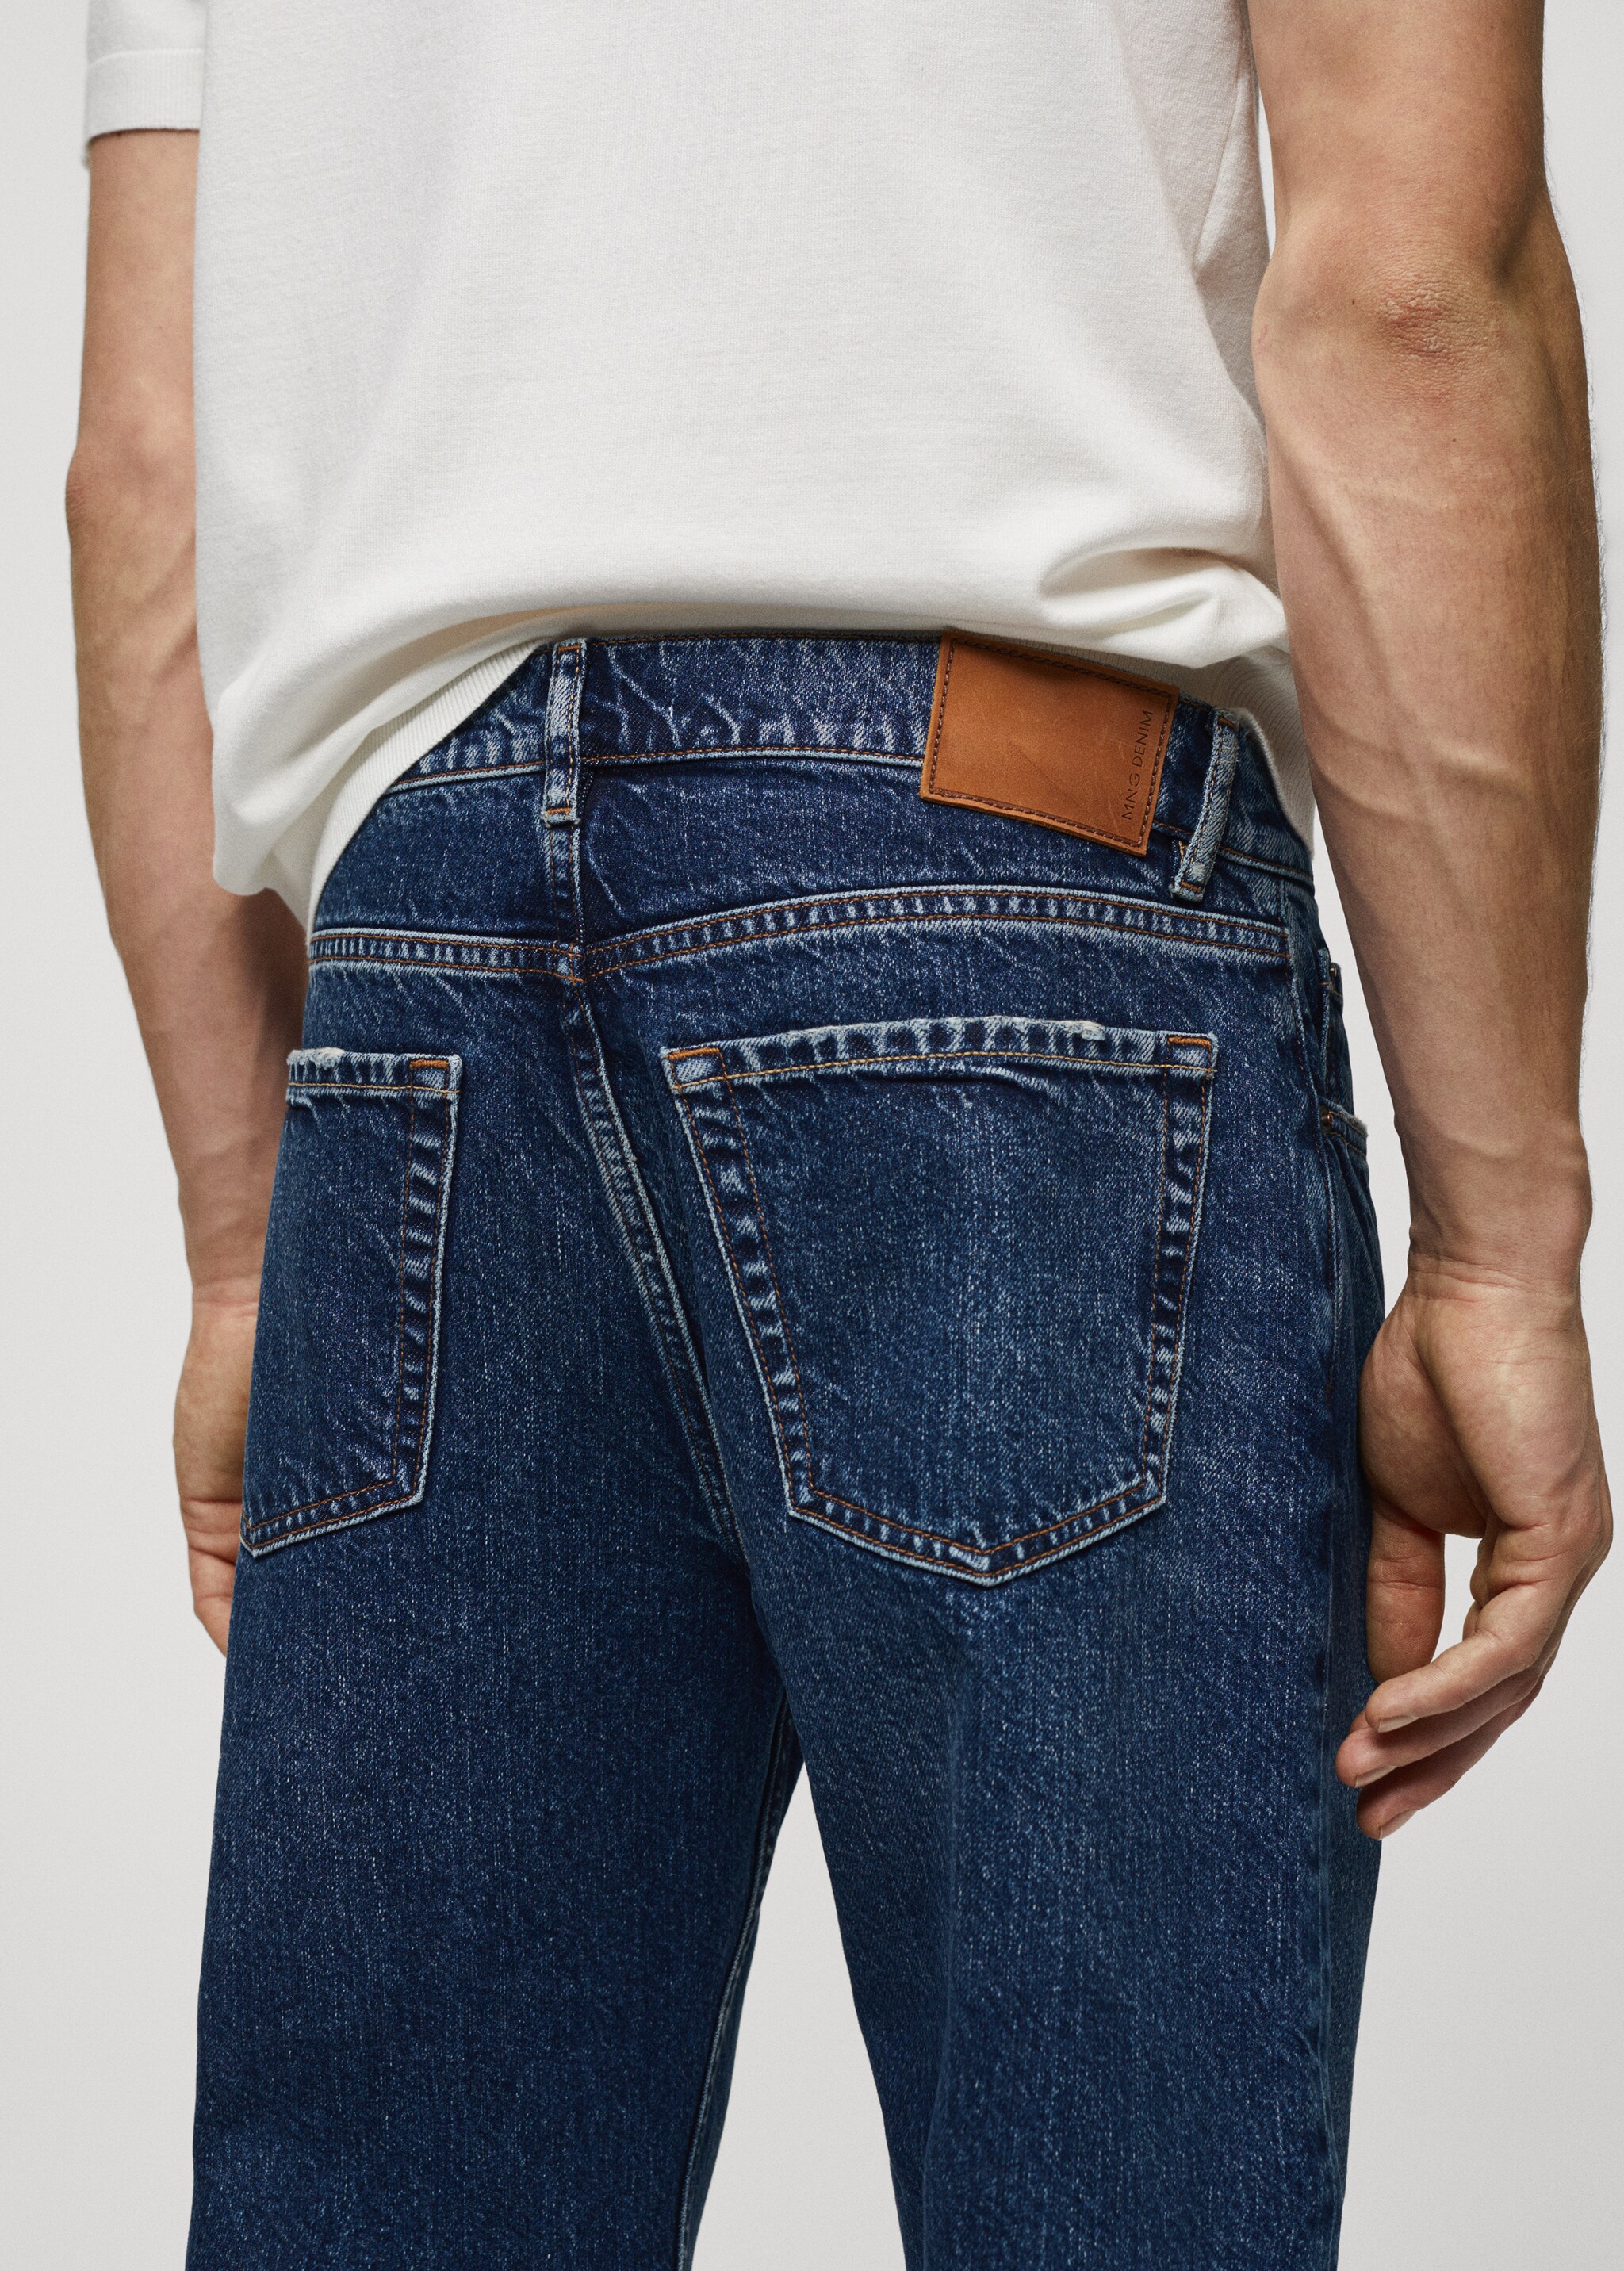 Regular fit dark wash jeans - Details of the article 4